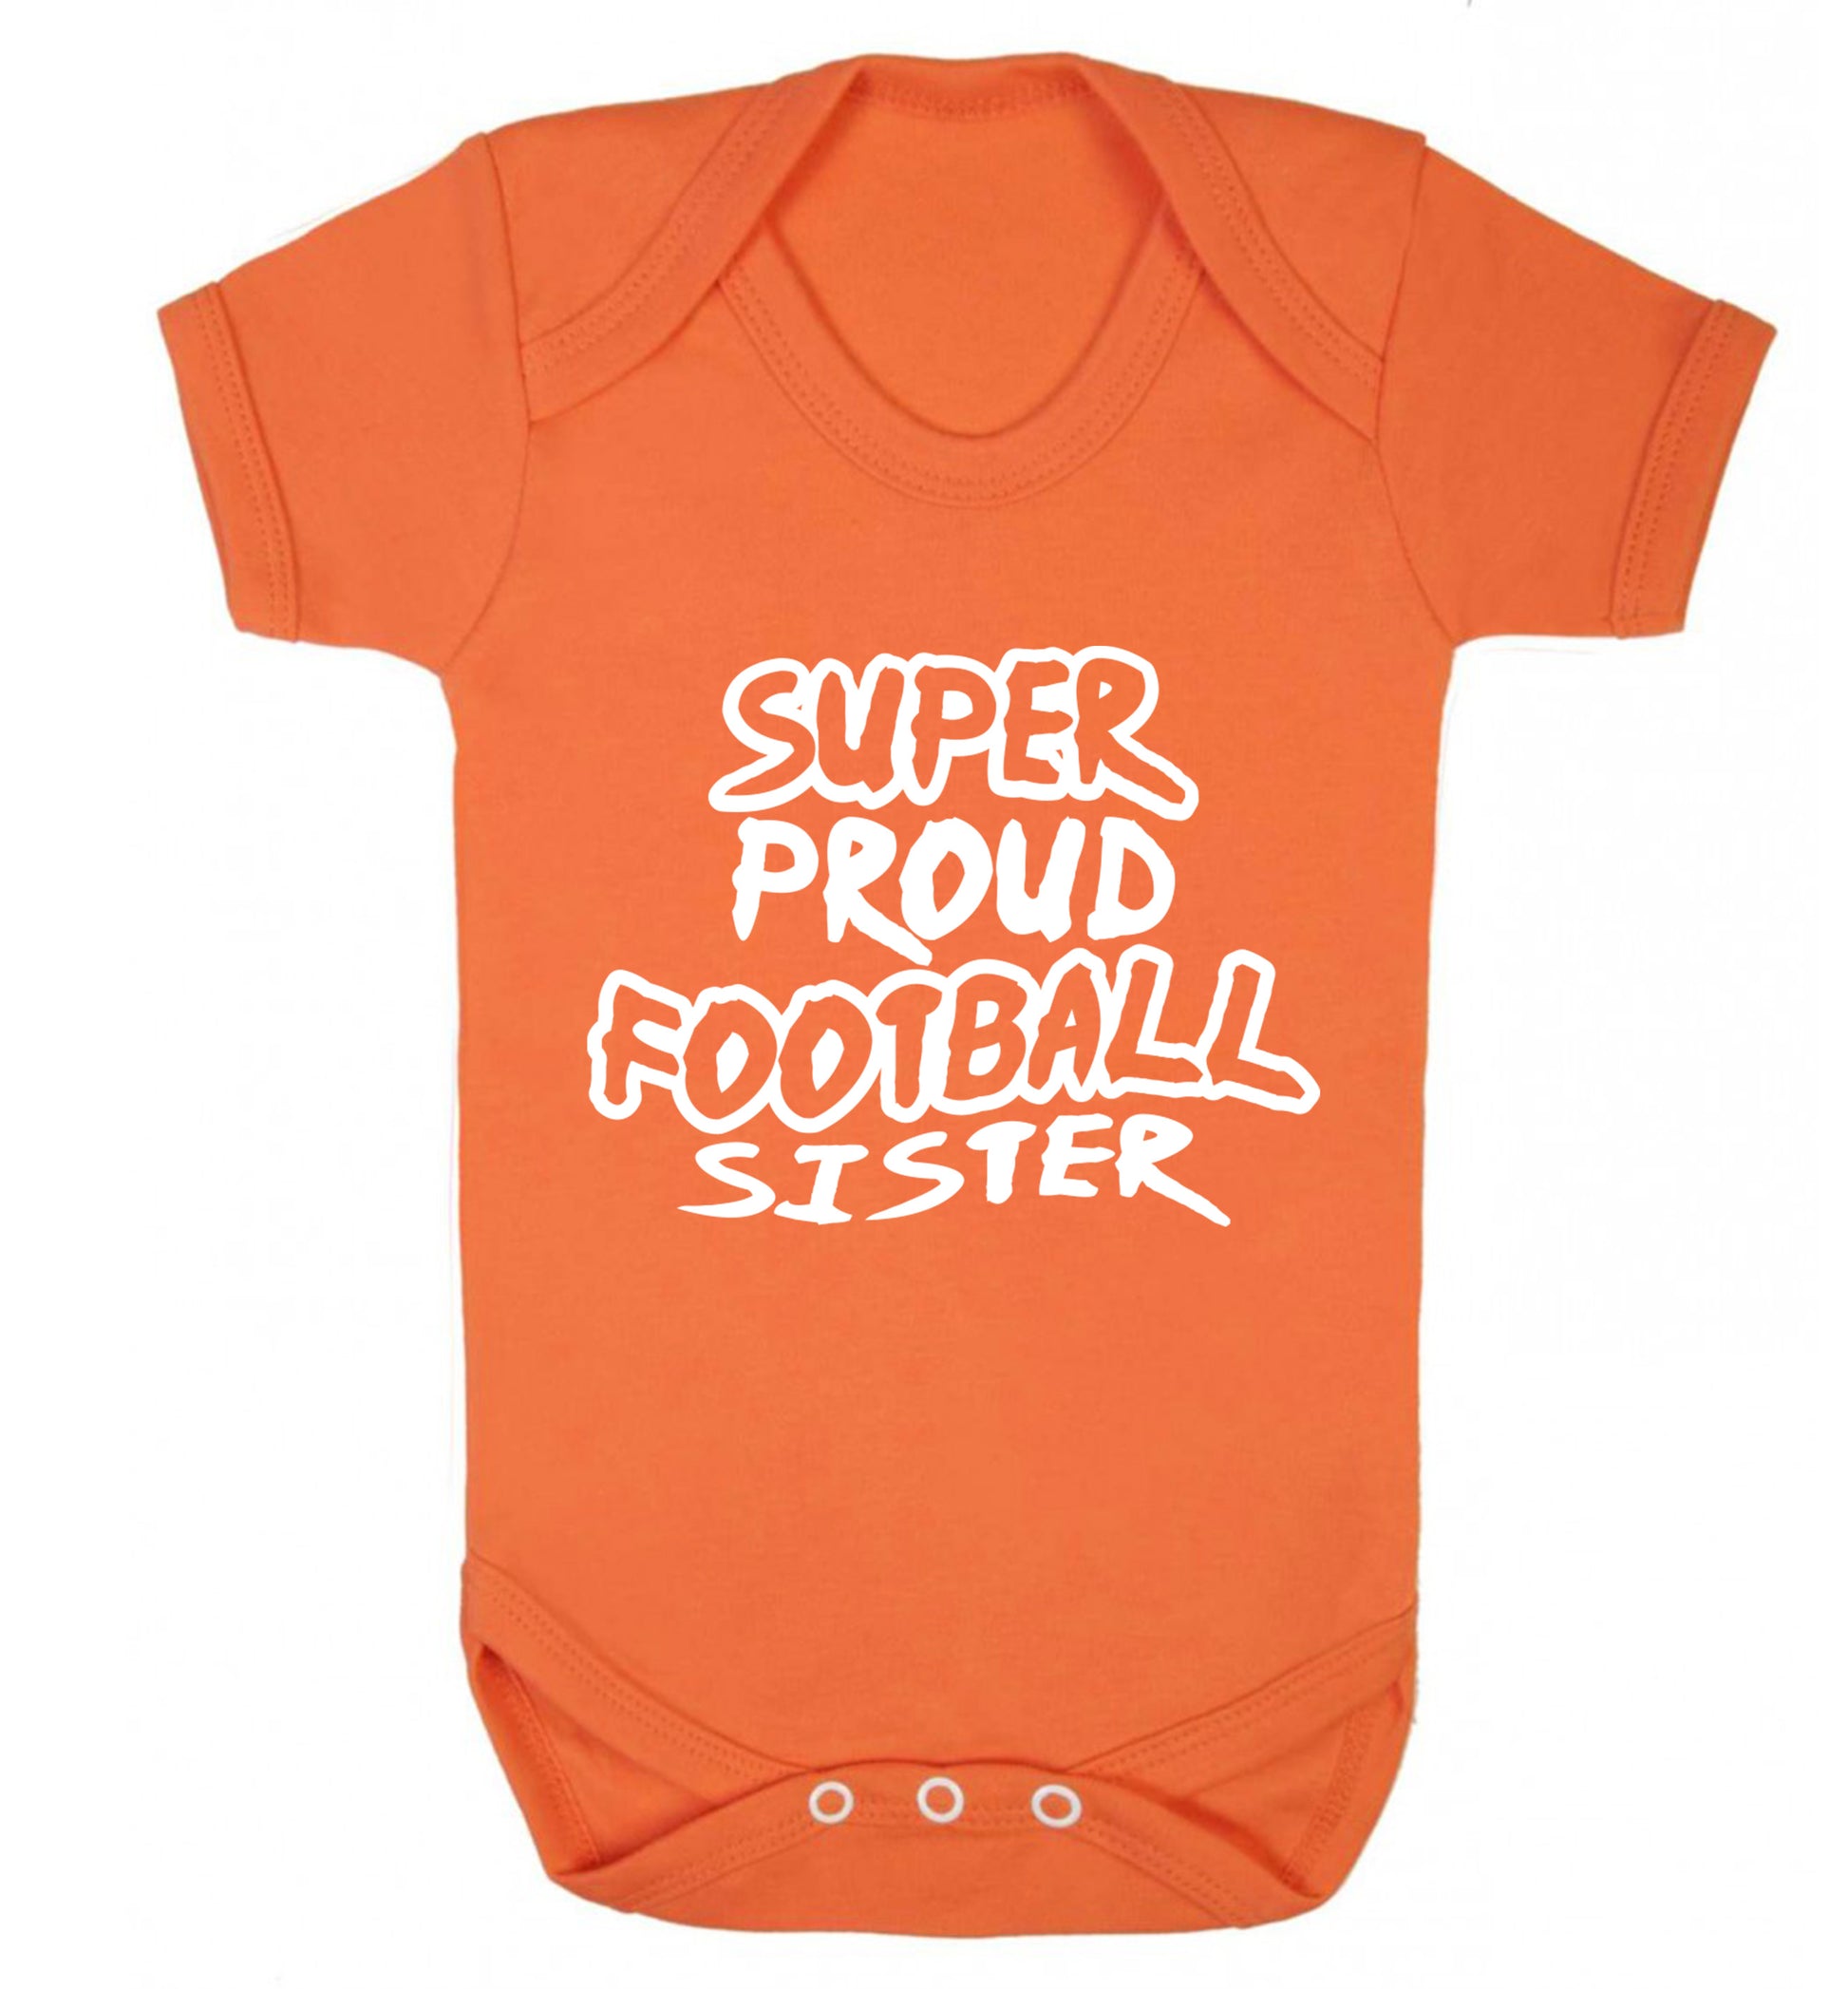 Super proud football sister Baby Vest orange 18-24 months